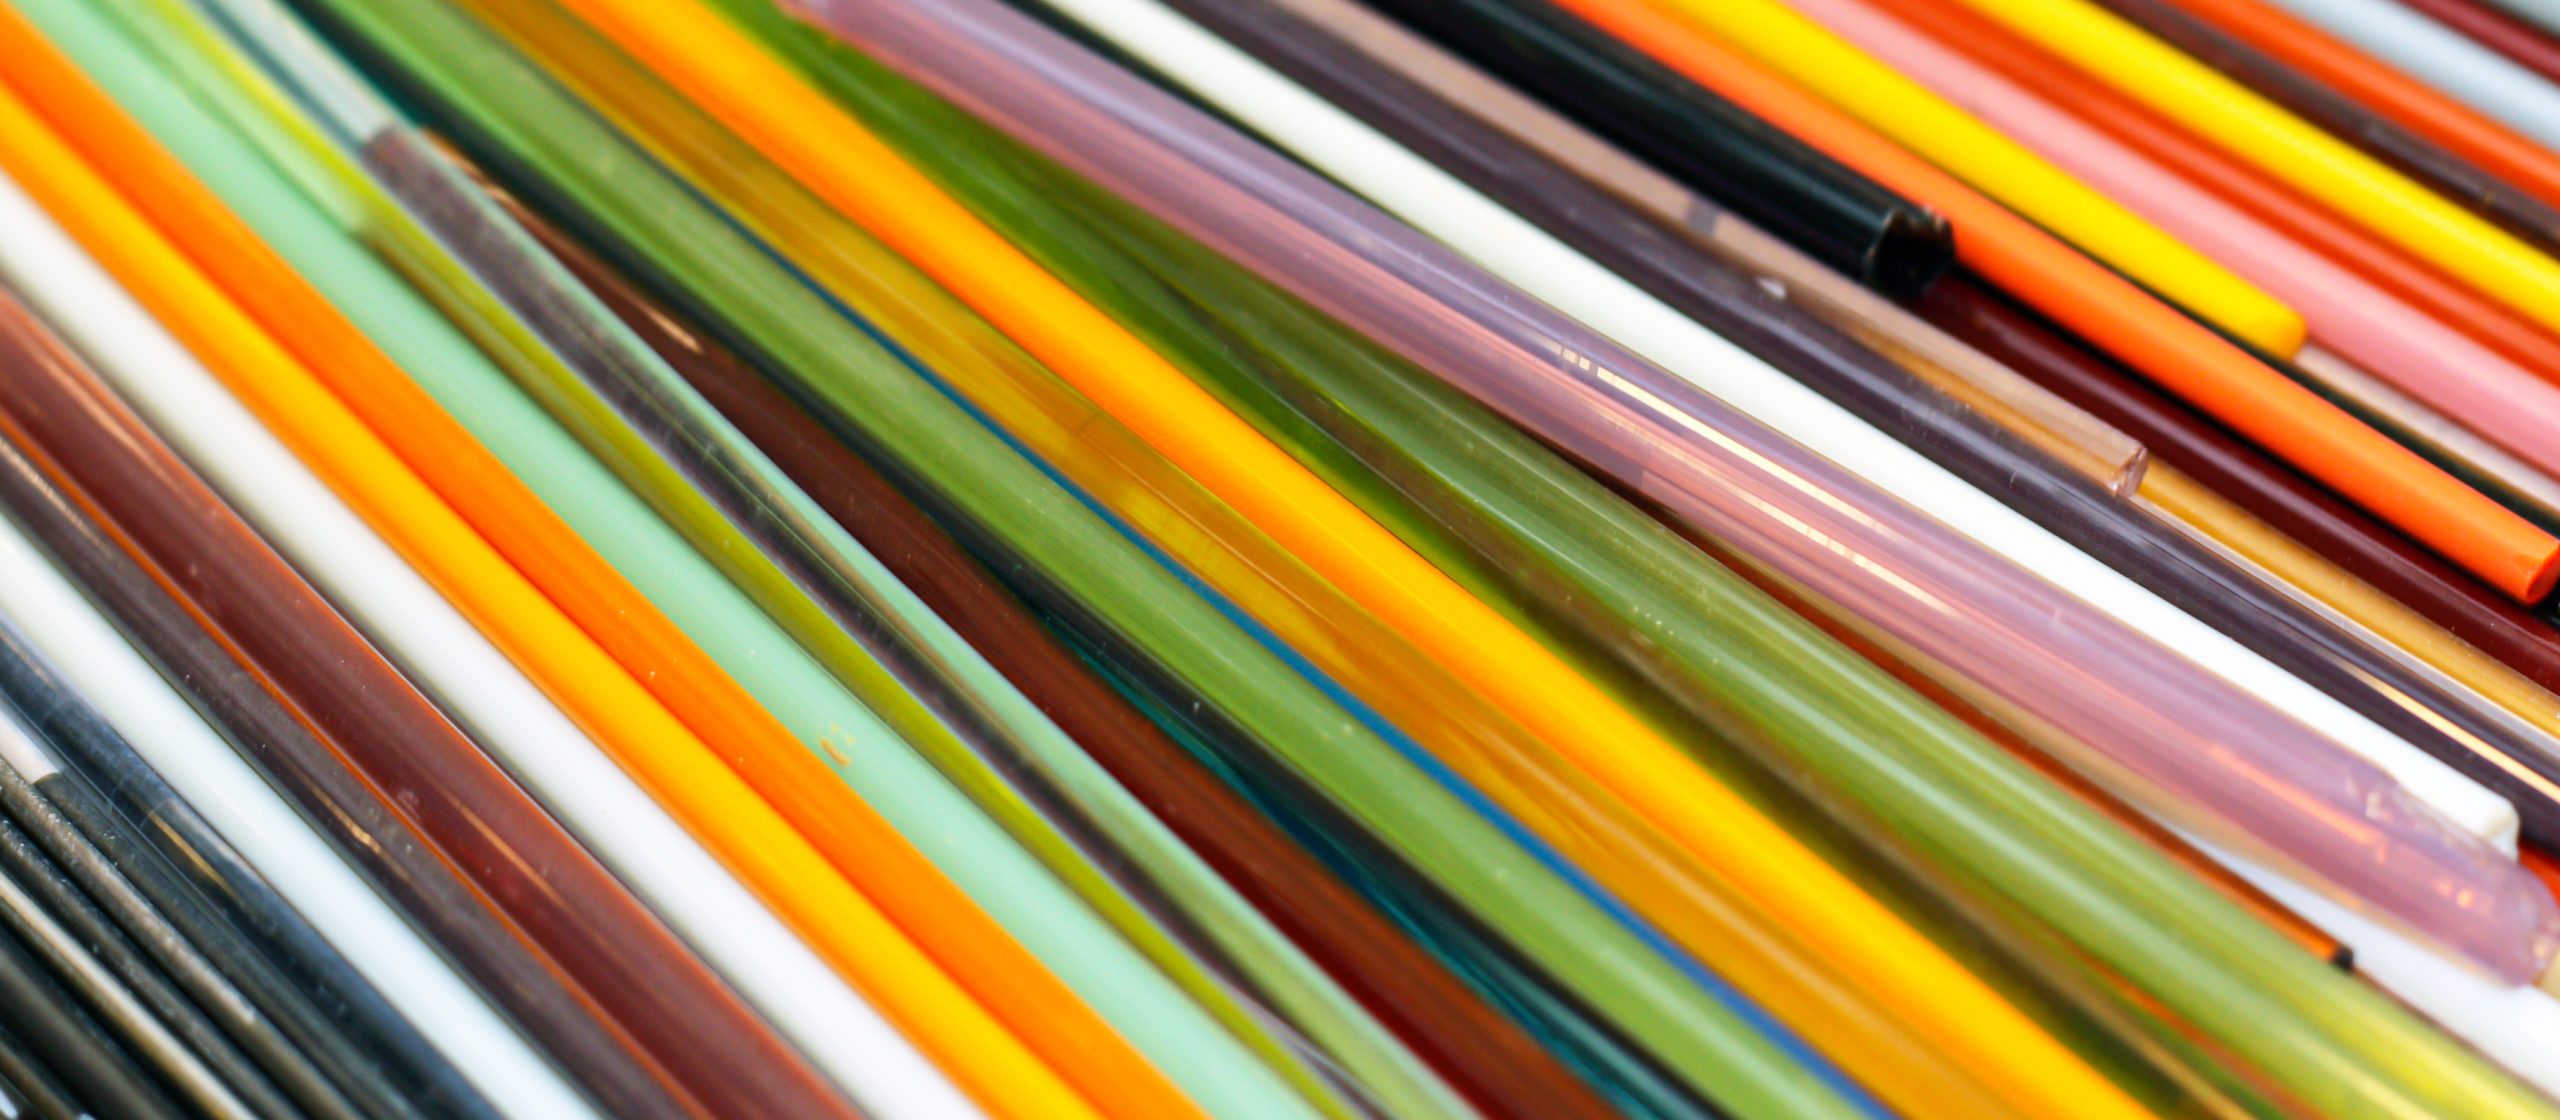 A closeup of colorful glass cane.